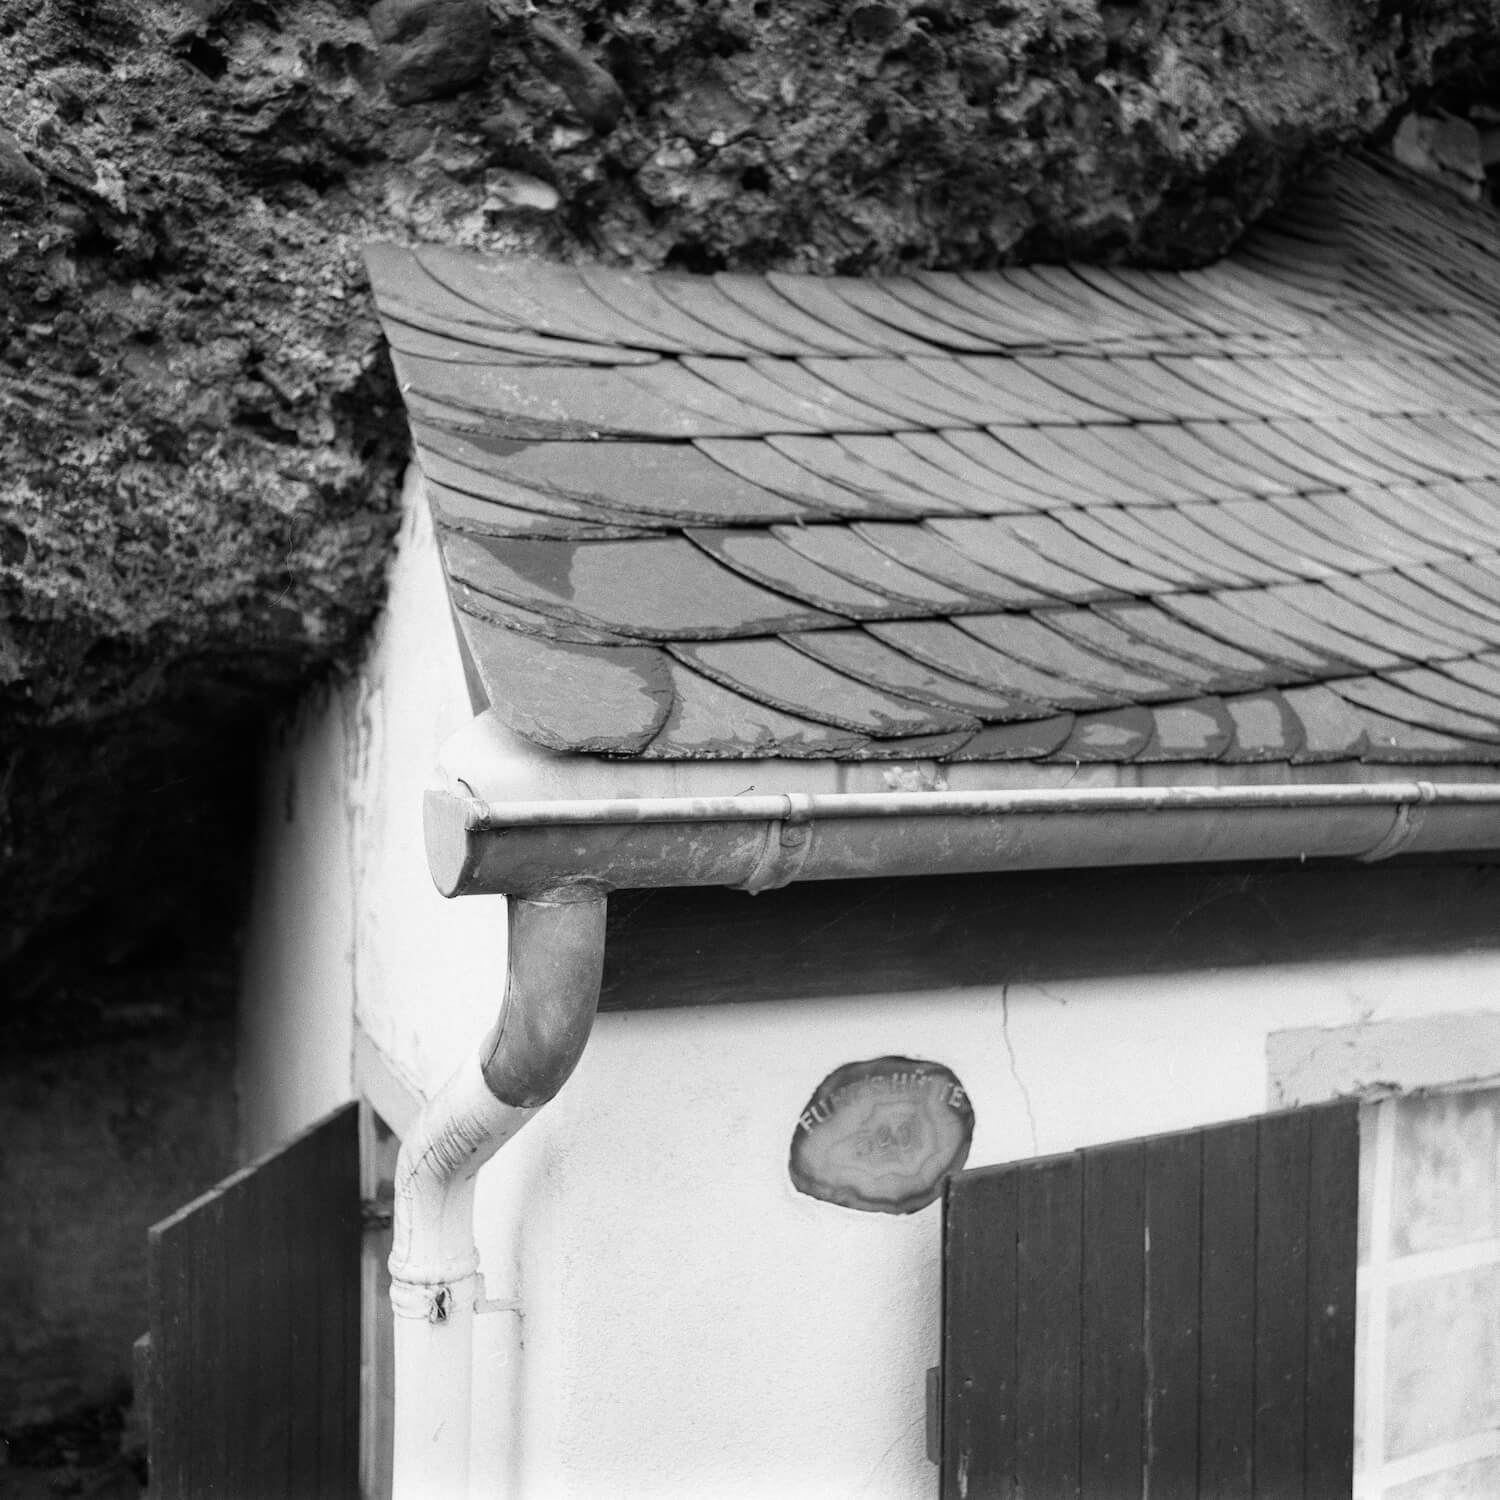 5 Frames... Of Fuhr's Huette: a hut built under a fallen rock on ILFORD HP5 PLUS (EI 400 / 120 Format / Rolleiflex SL66) - by Olaf Lengler